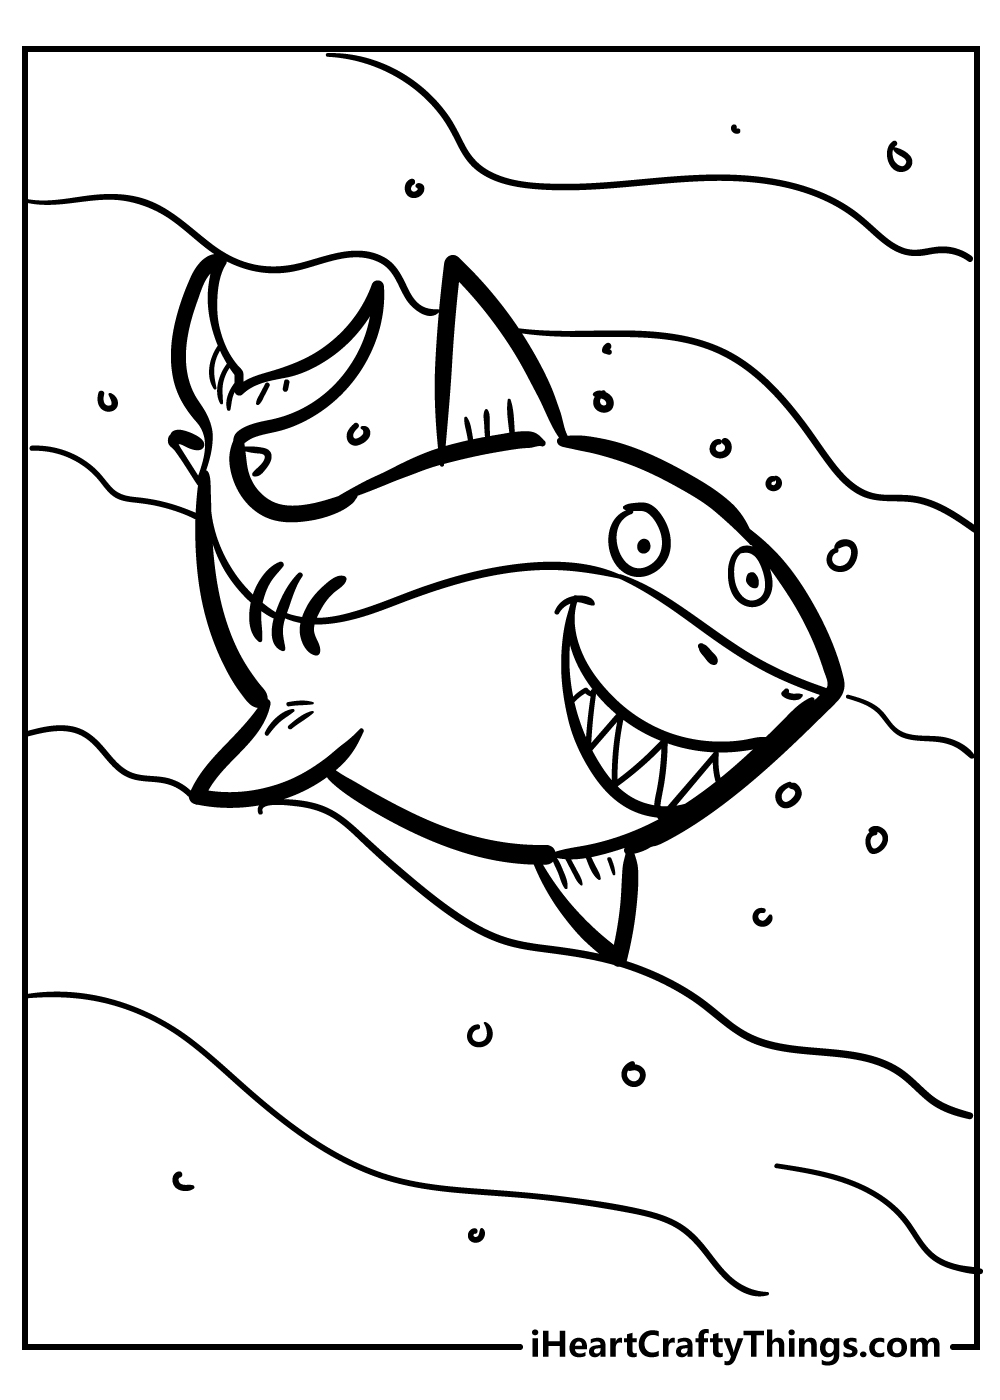 Shark coloring sheet for children free download